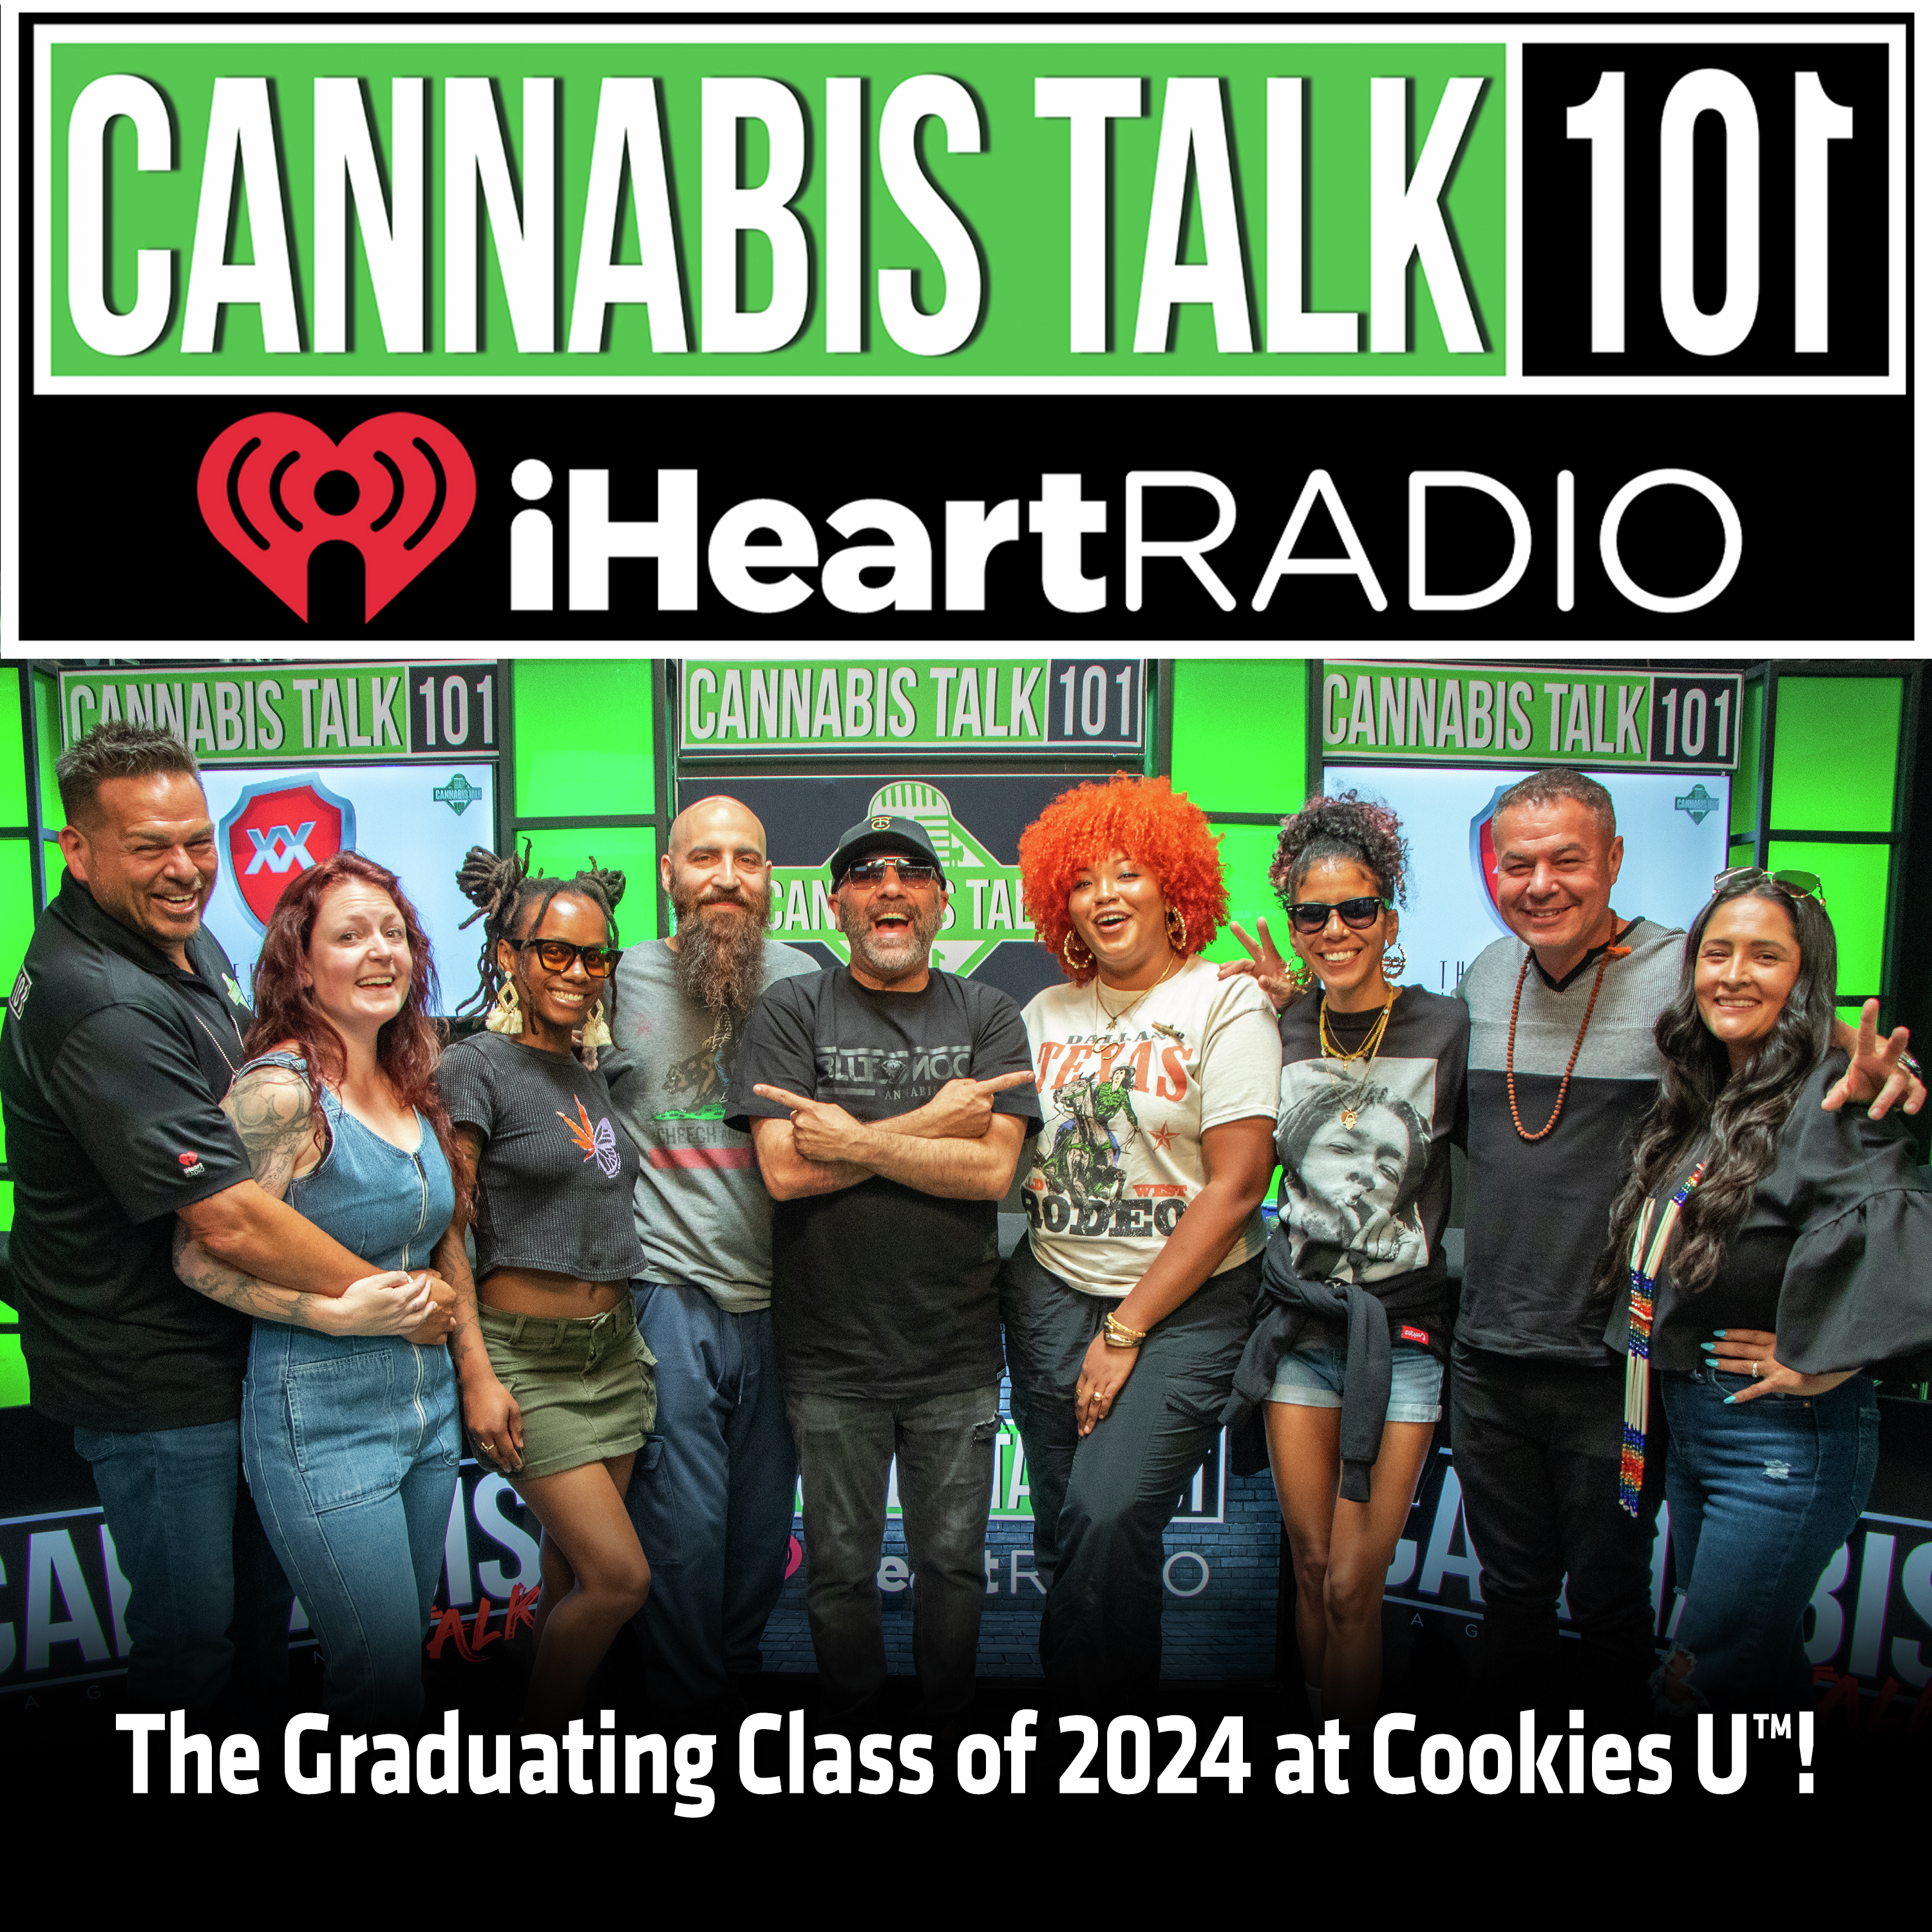 The Graduating Class of 2024 at Cookies U™!